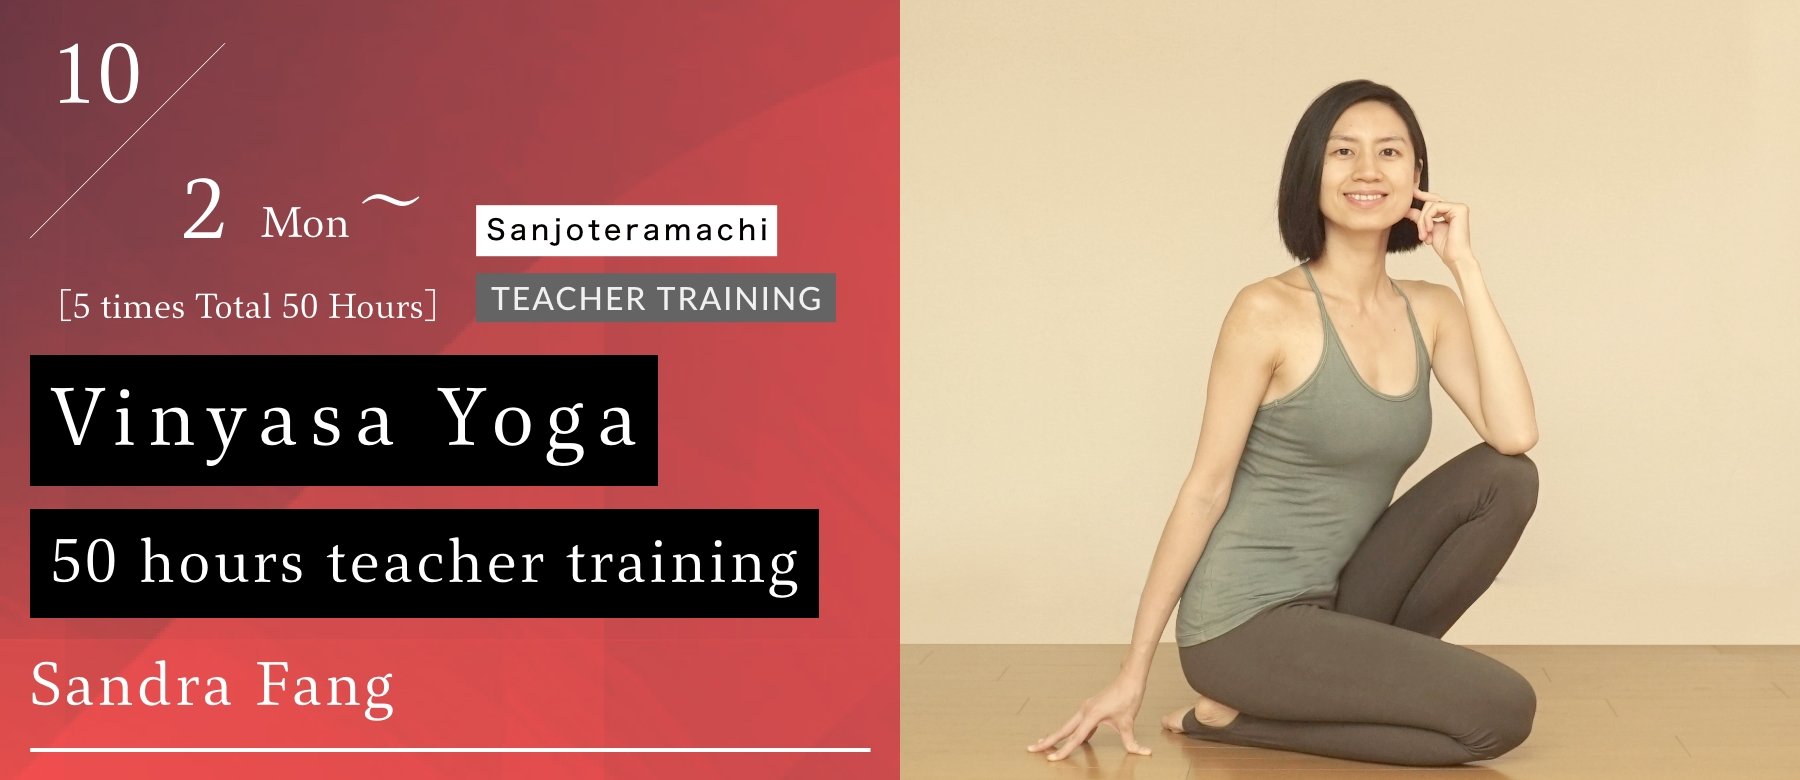 Vinyasa yoga 50 hours teacher training